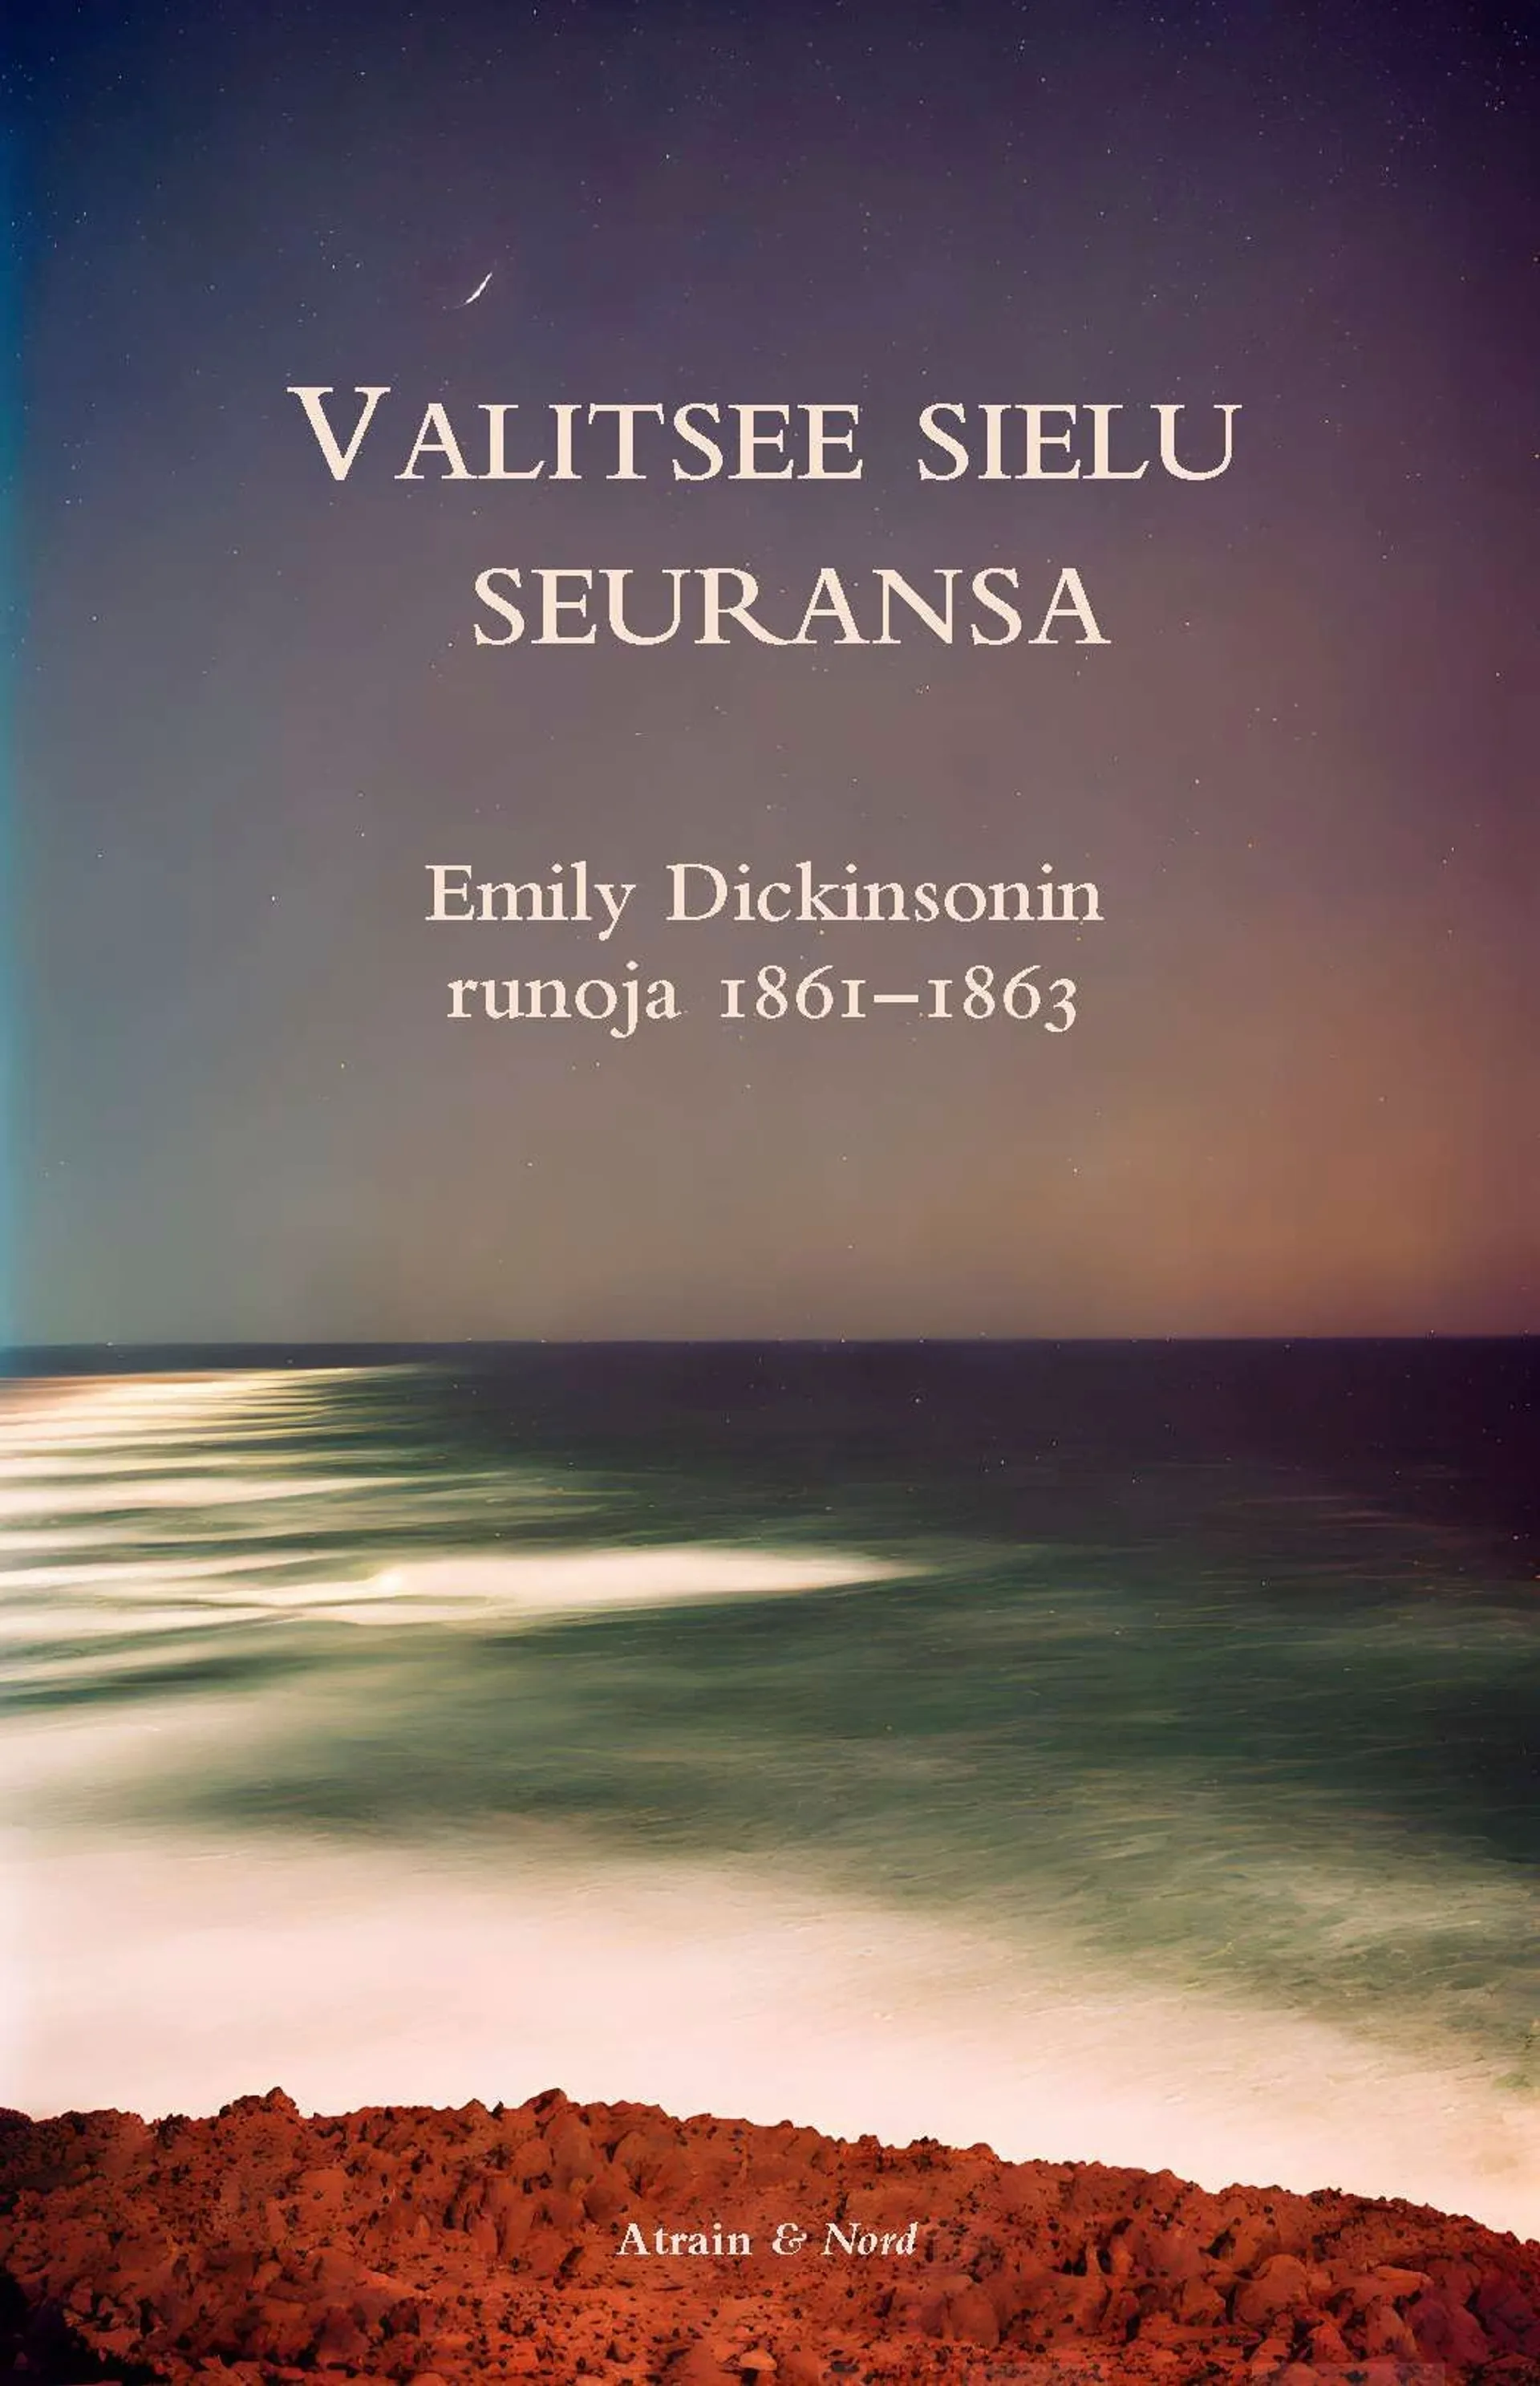 Valitsee sielu seuransa - Emily Dickinsonin runoja 1861-1863